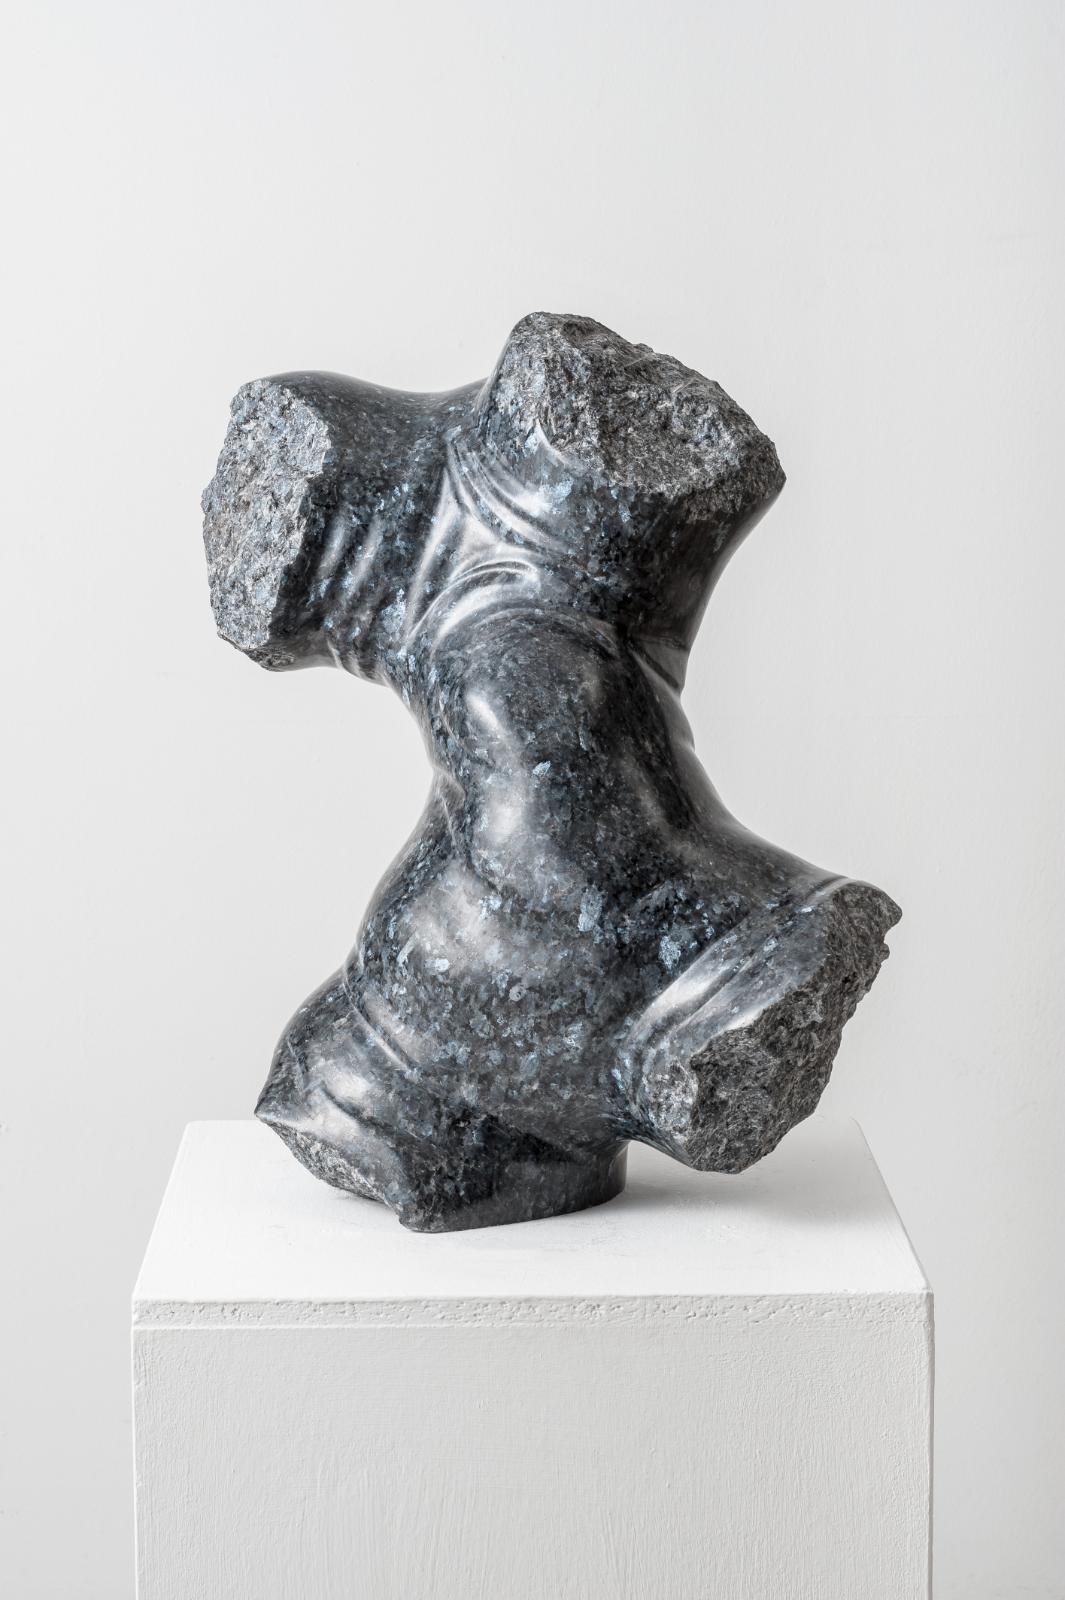 Christoph Traub, Torso, Ansicht 1, 2016, Labrador, 48 x 30 x 45 cm, Preis auf Anfrage, trc008kü